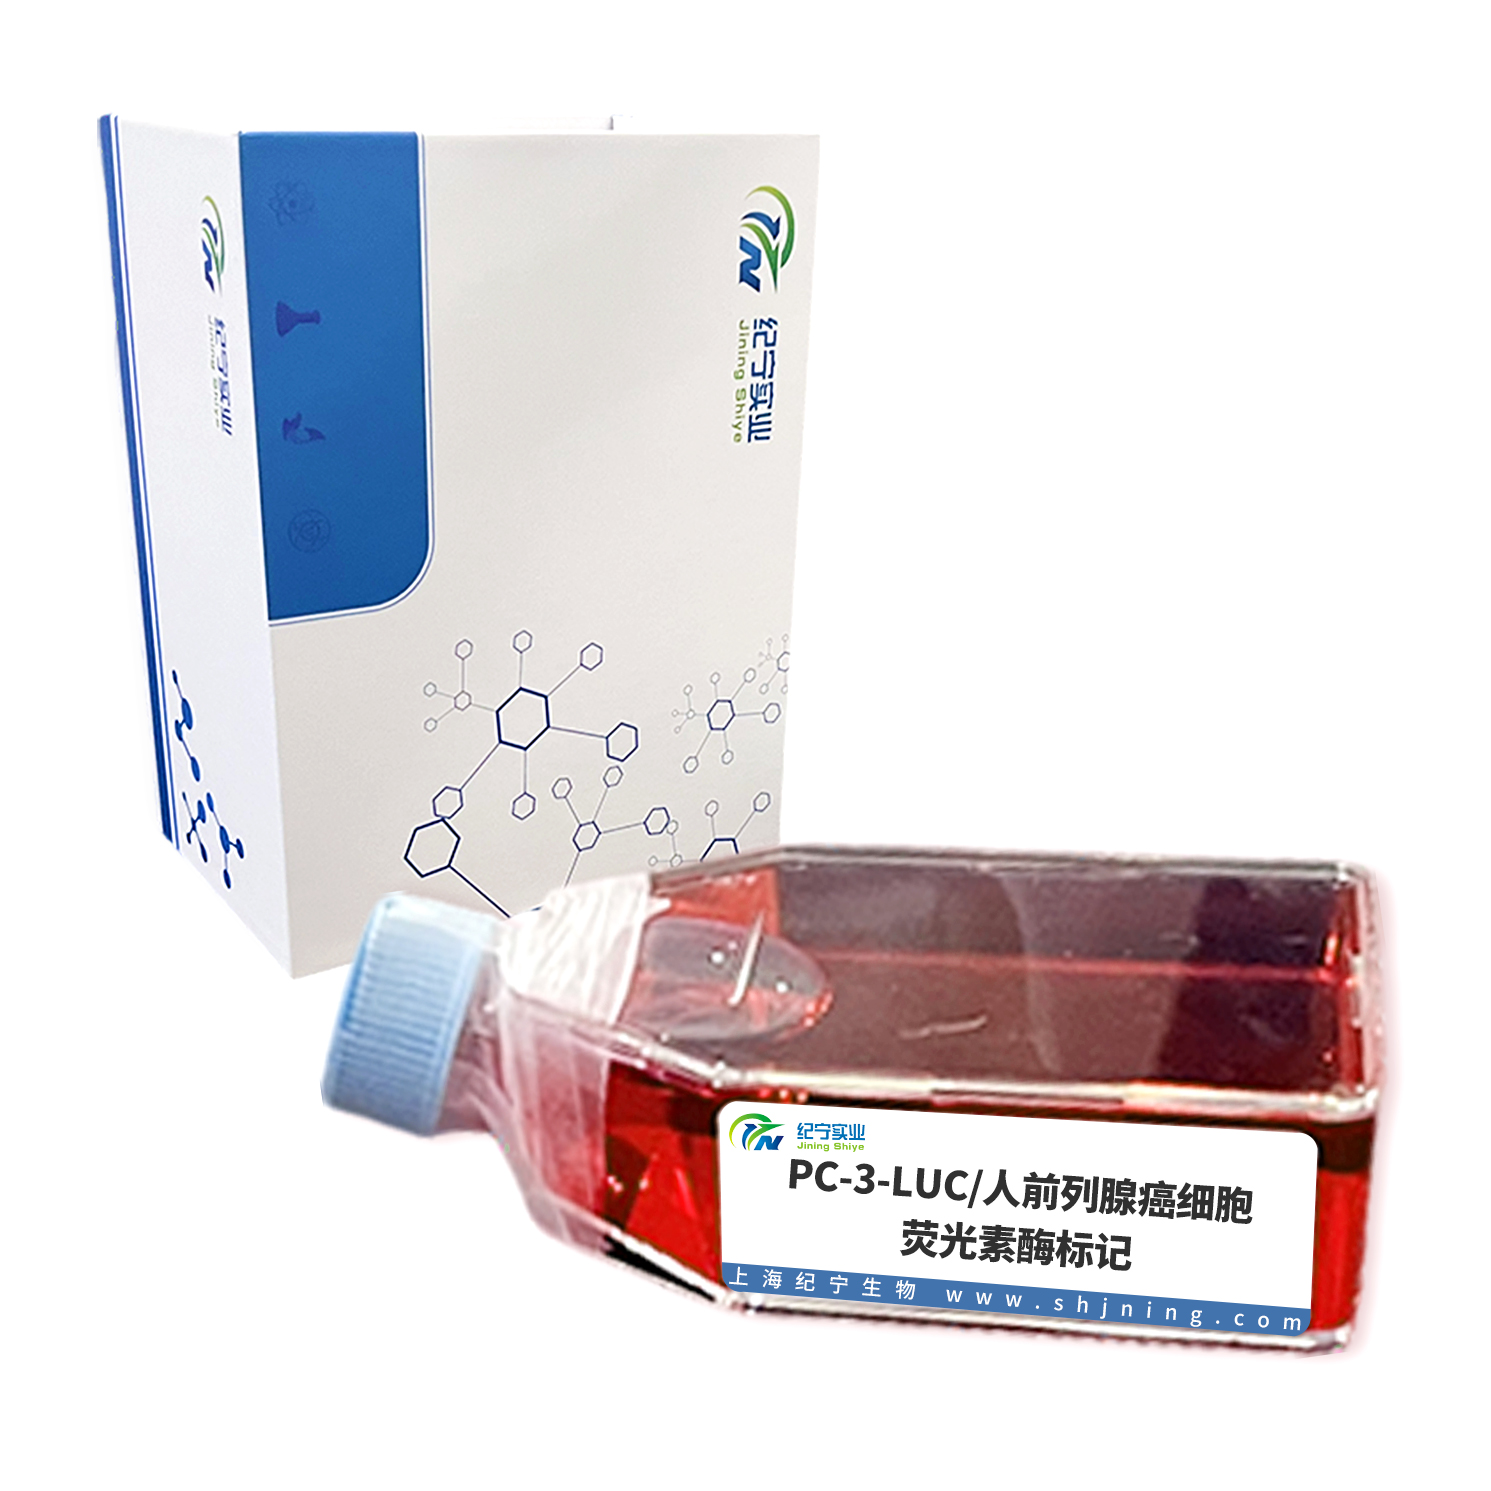 PC-3-LUC/人前列腺癌细胞-荧光素酶标记